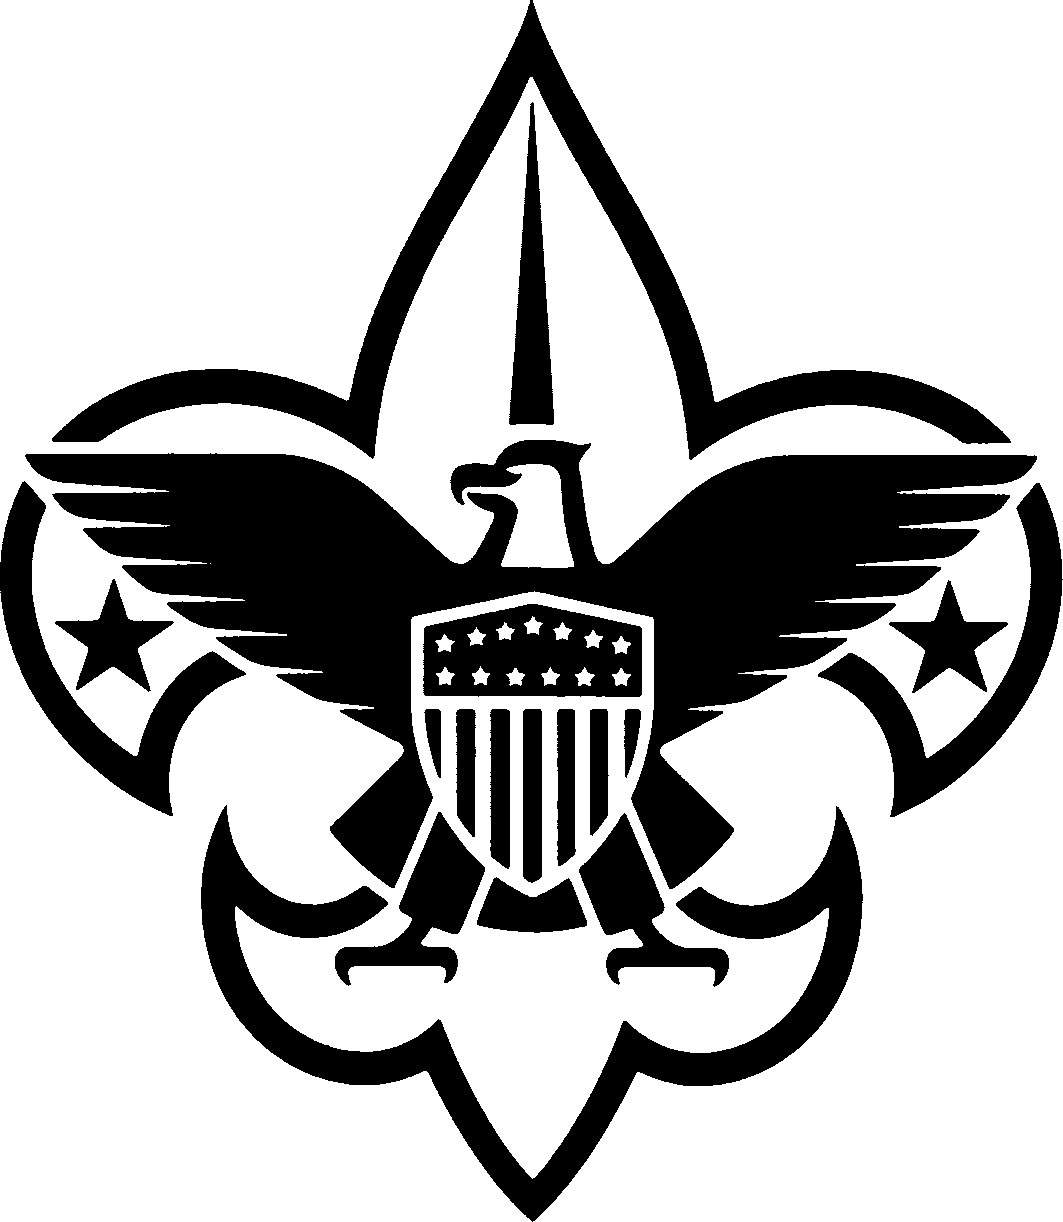 Boy Scout Clipart Scout Clip Art. bsa_logo_clipart_bw.gif (1063x1222)